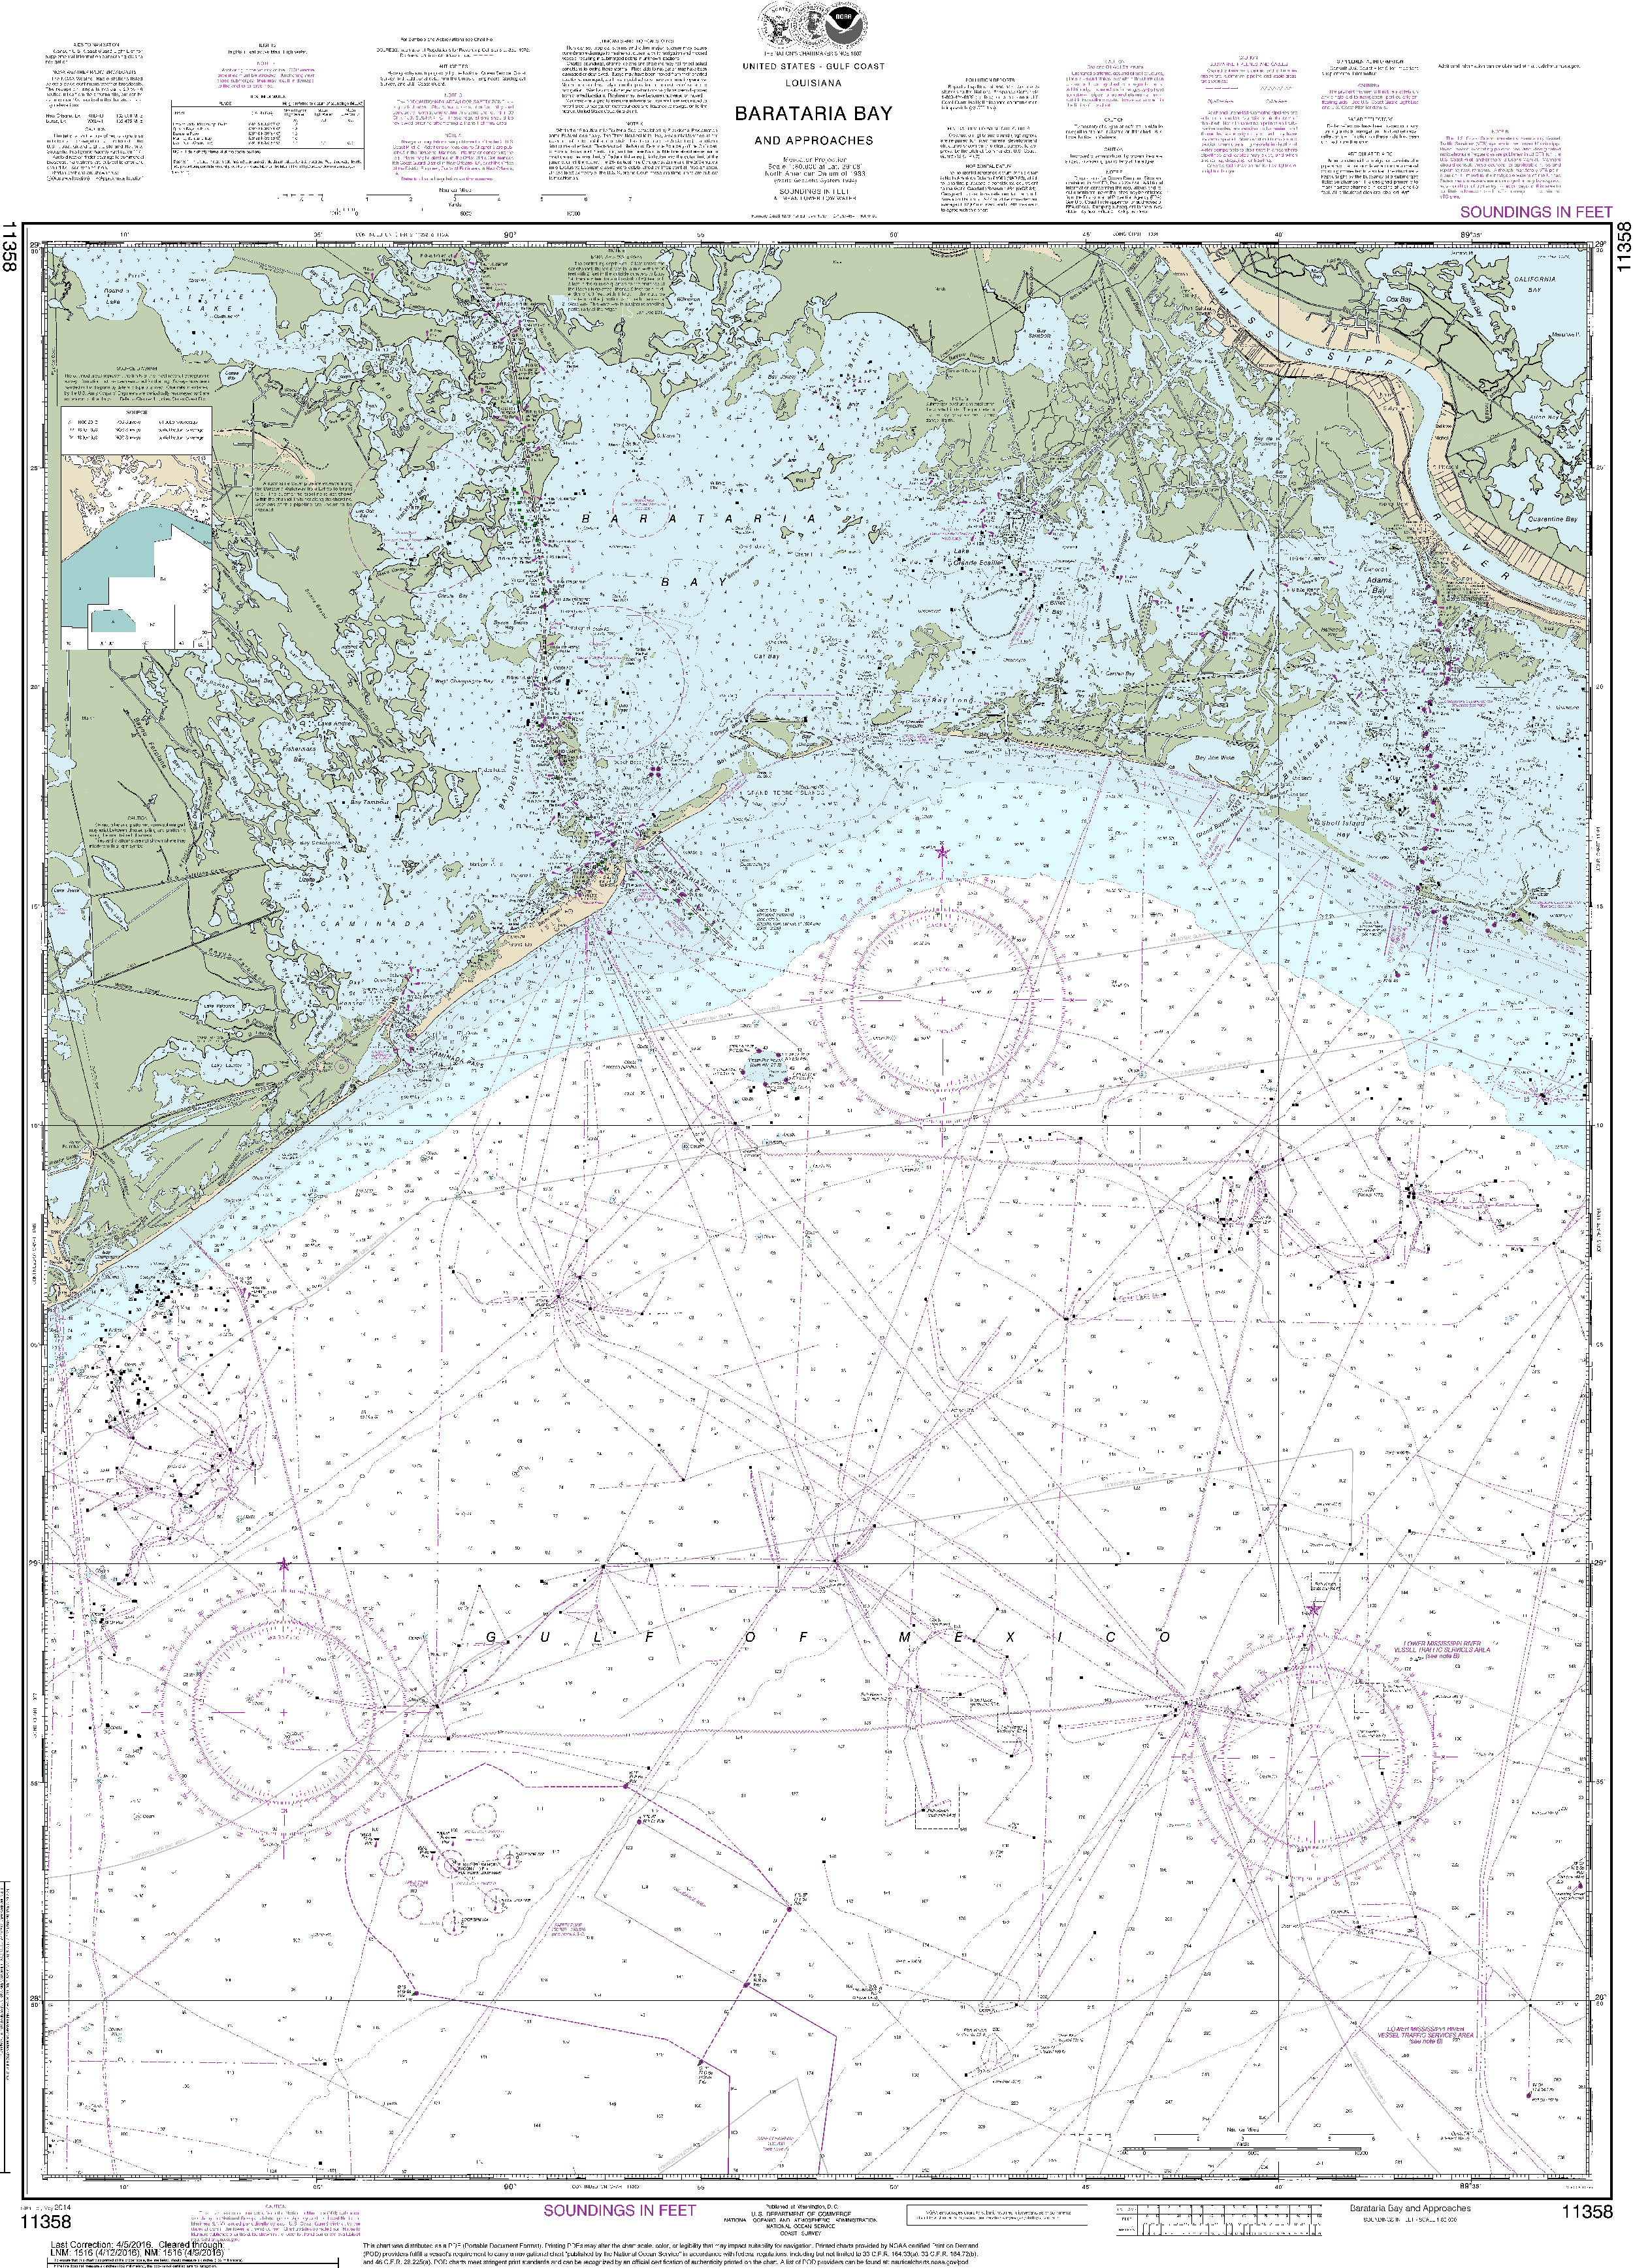 NOAA Nautical Chart 11358: Barataria Bay and approaches